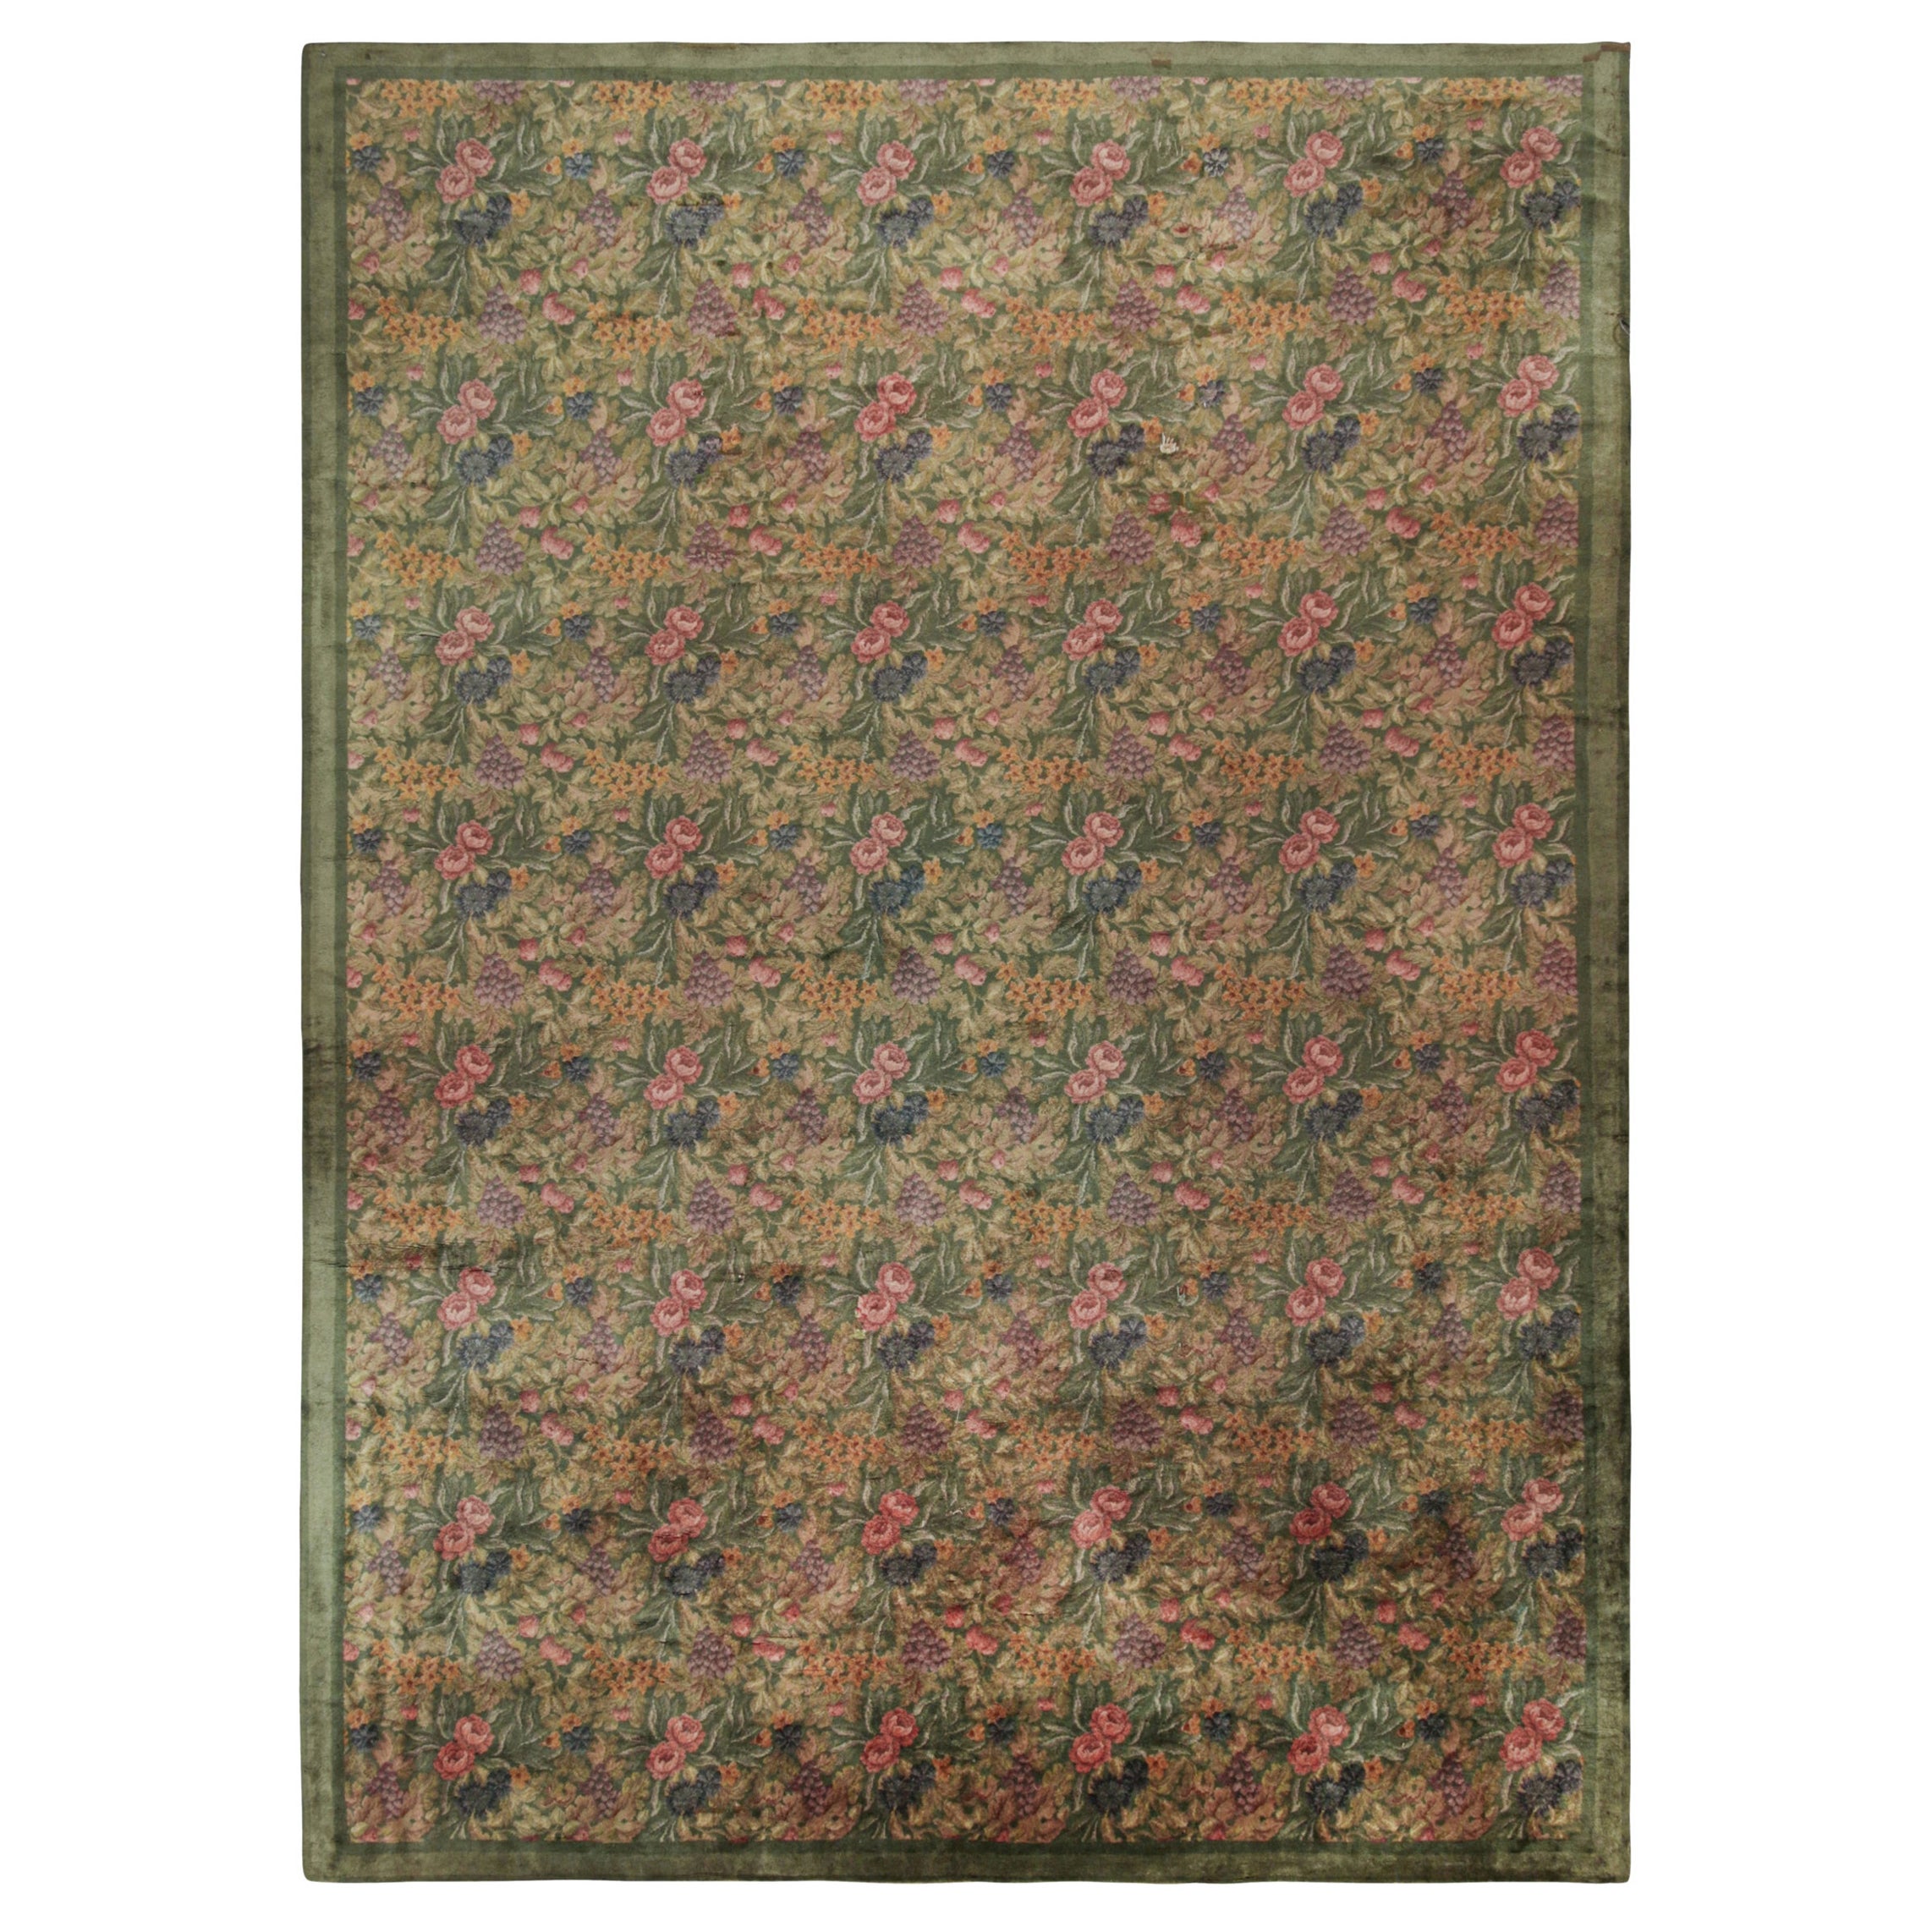 Tapis Axminster anglais ancien en vert avec motif floral rose